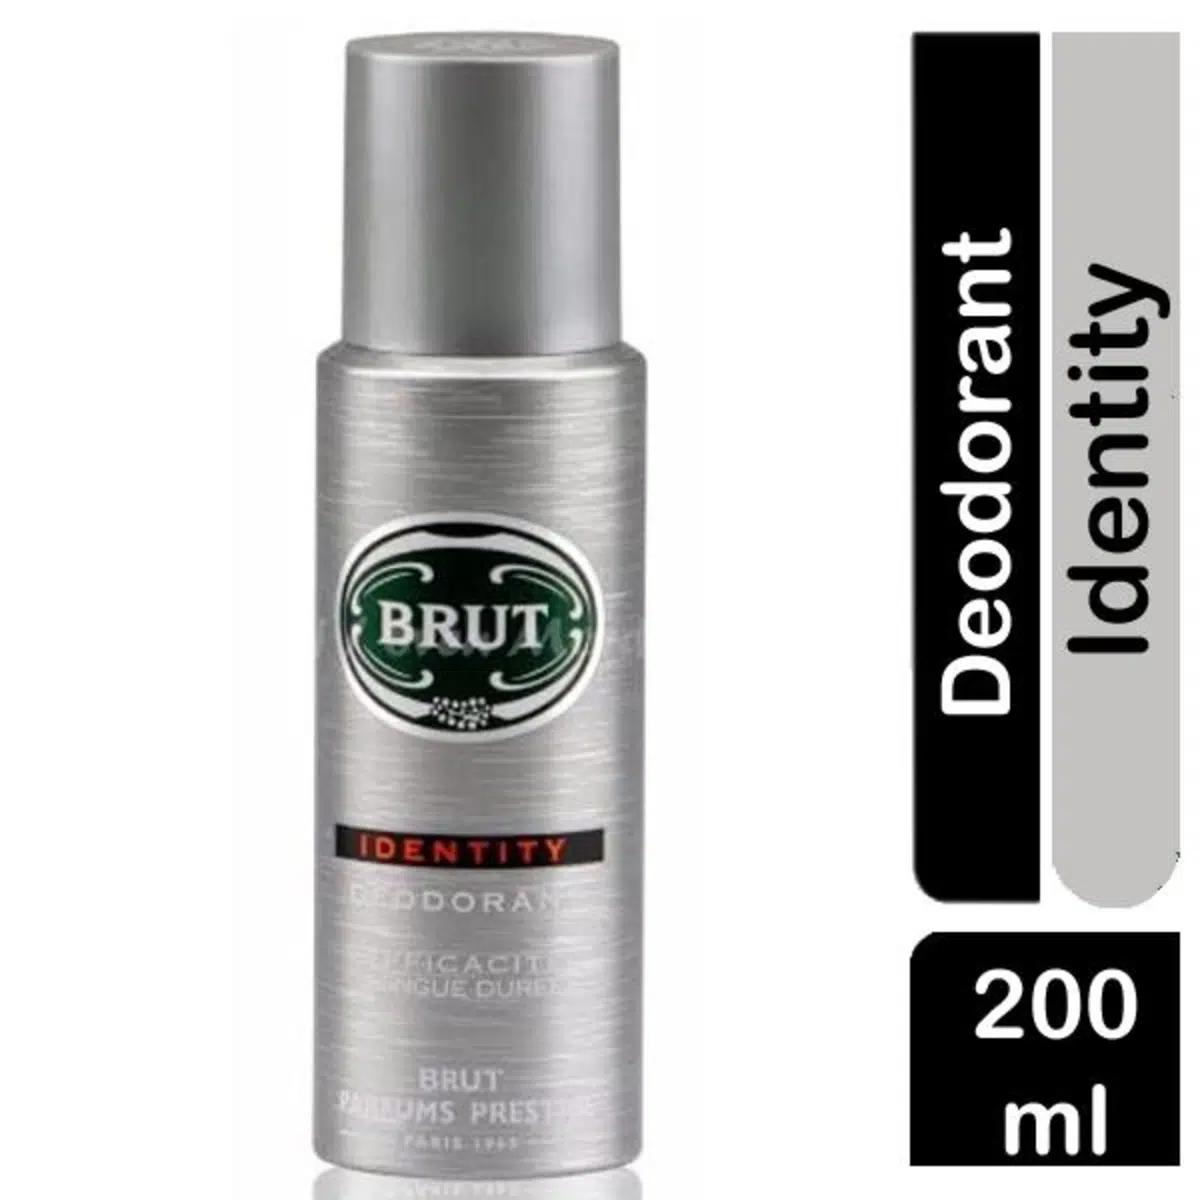 Brut Identity Deodorant Spray - for Men (200 ml)